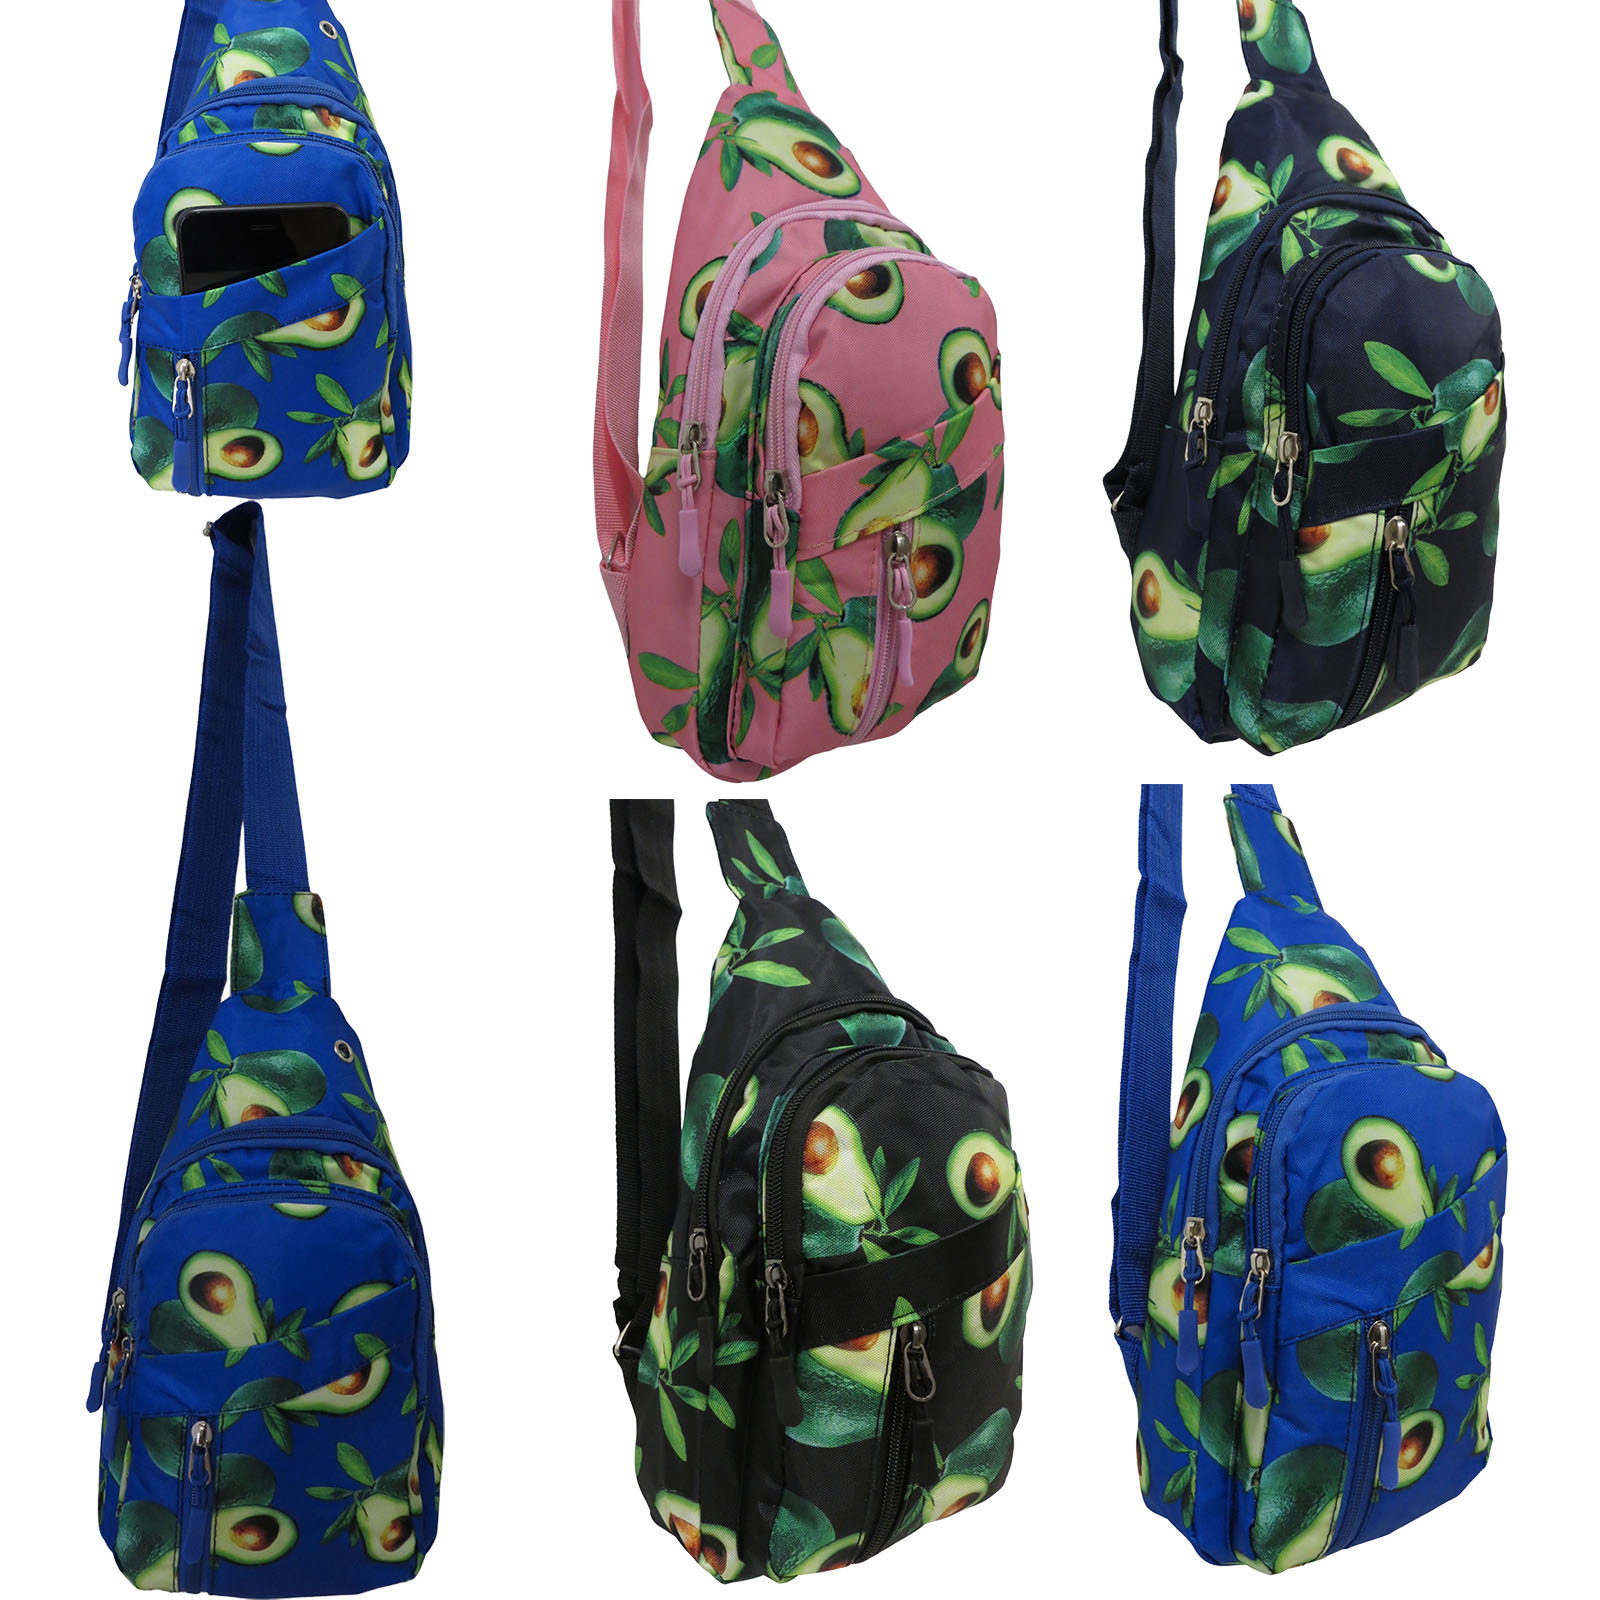 Men & Women's Printed Sling Bags w/ Cargo Zip-Up Pockets - Avocado Print